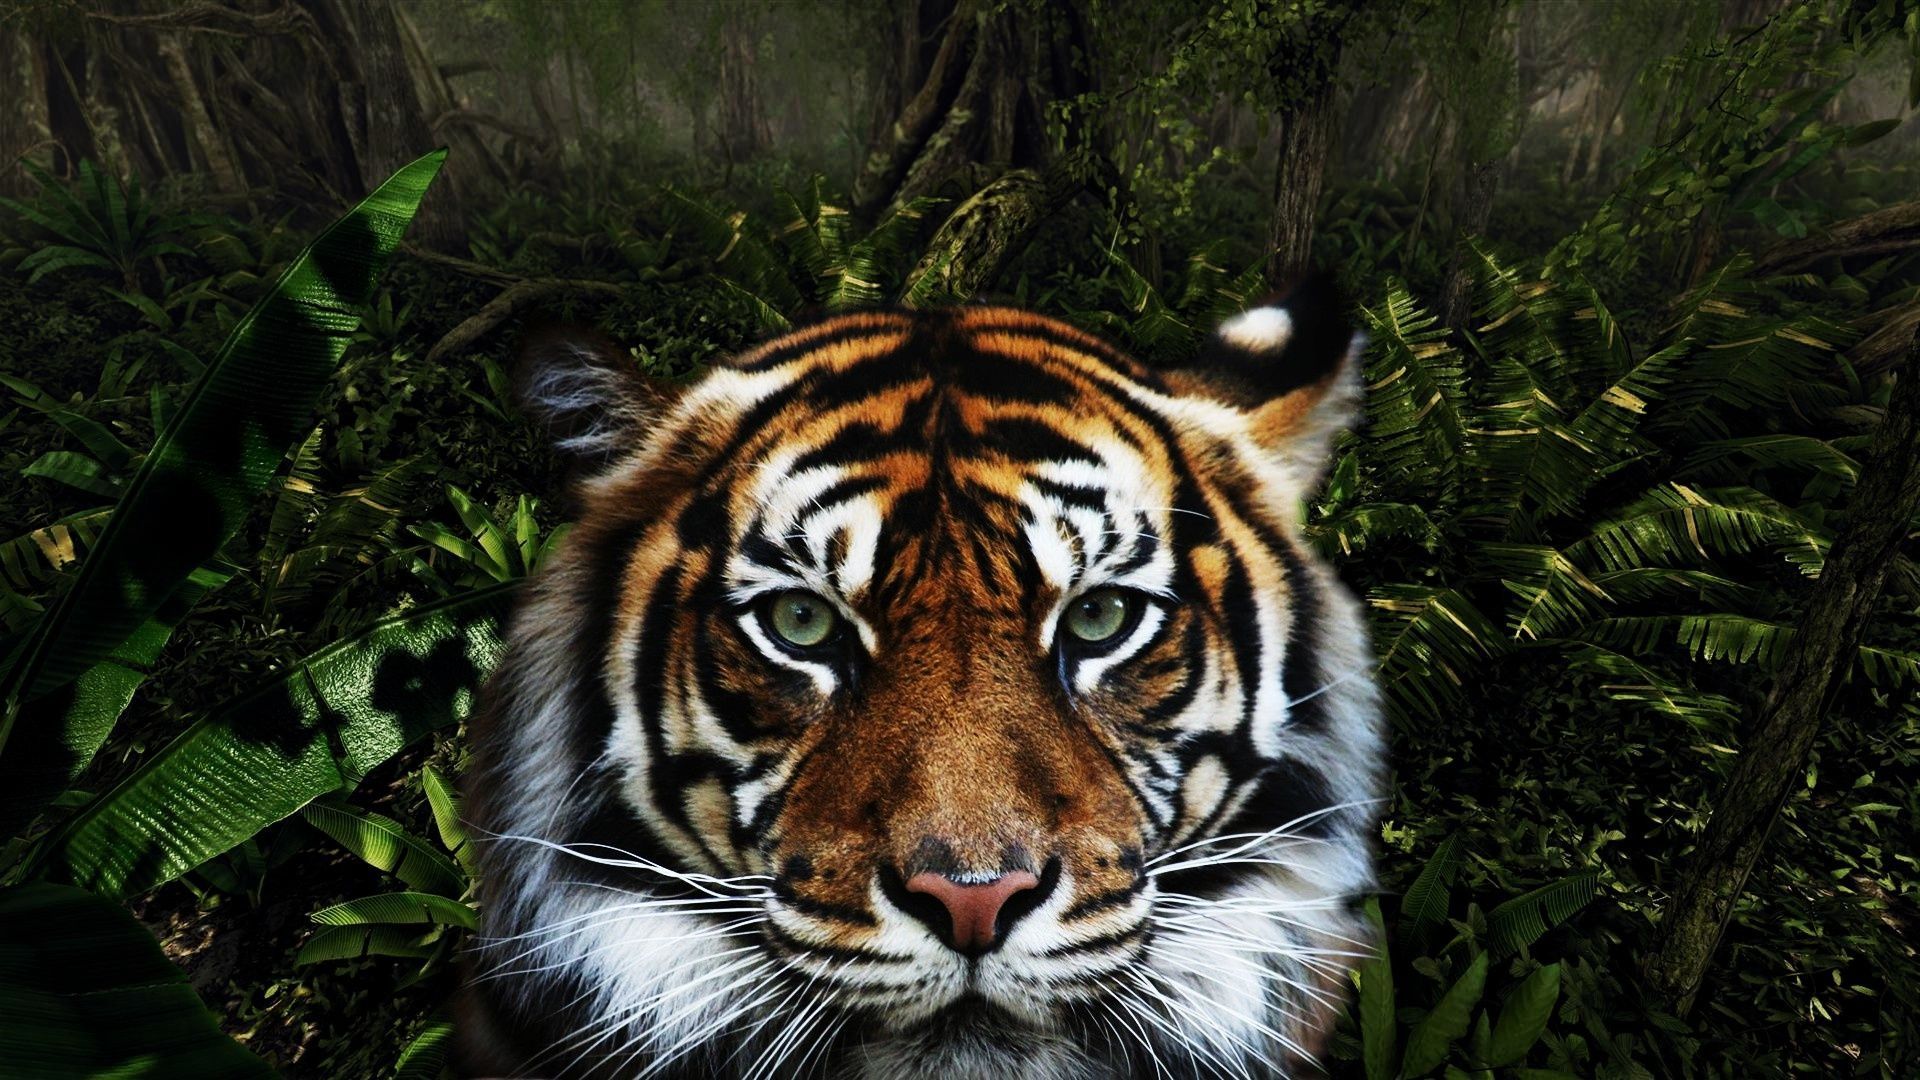 Tiger Photos HD (6) - Pleasantwalls.com | Find high Quality ...